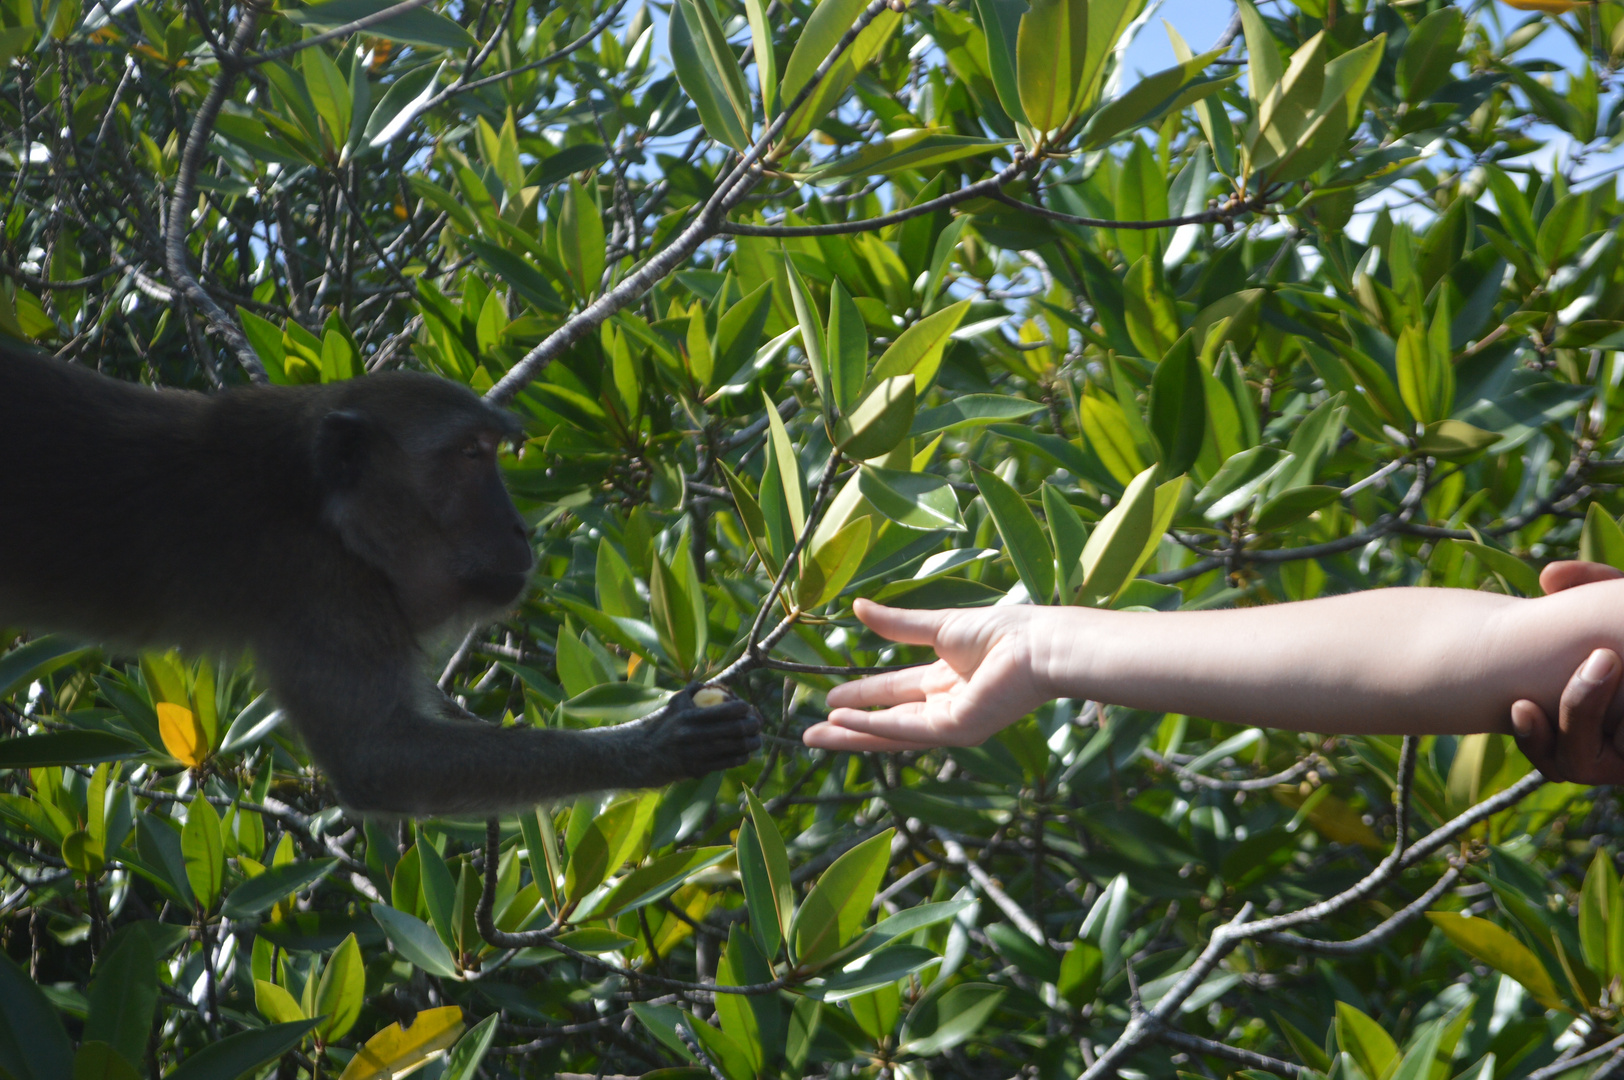 Wild Monkeys fed with bananas